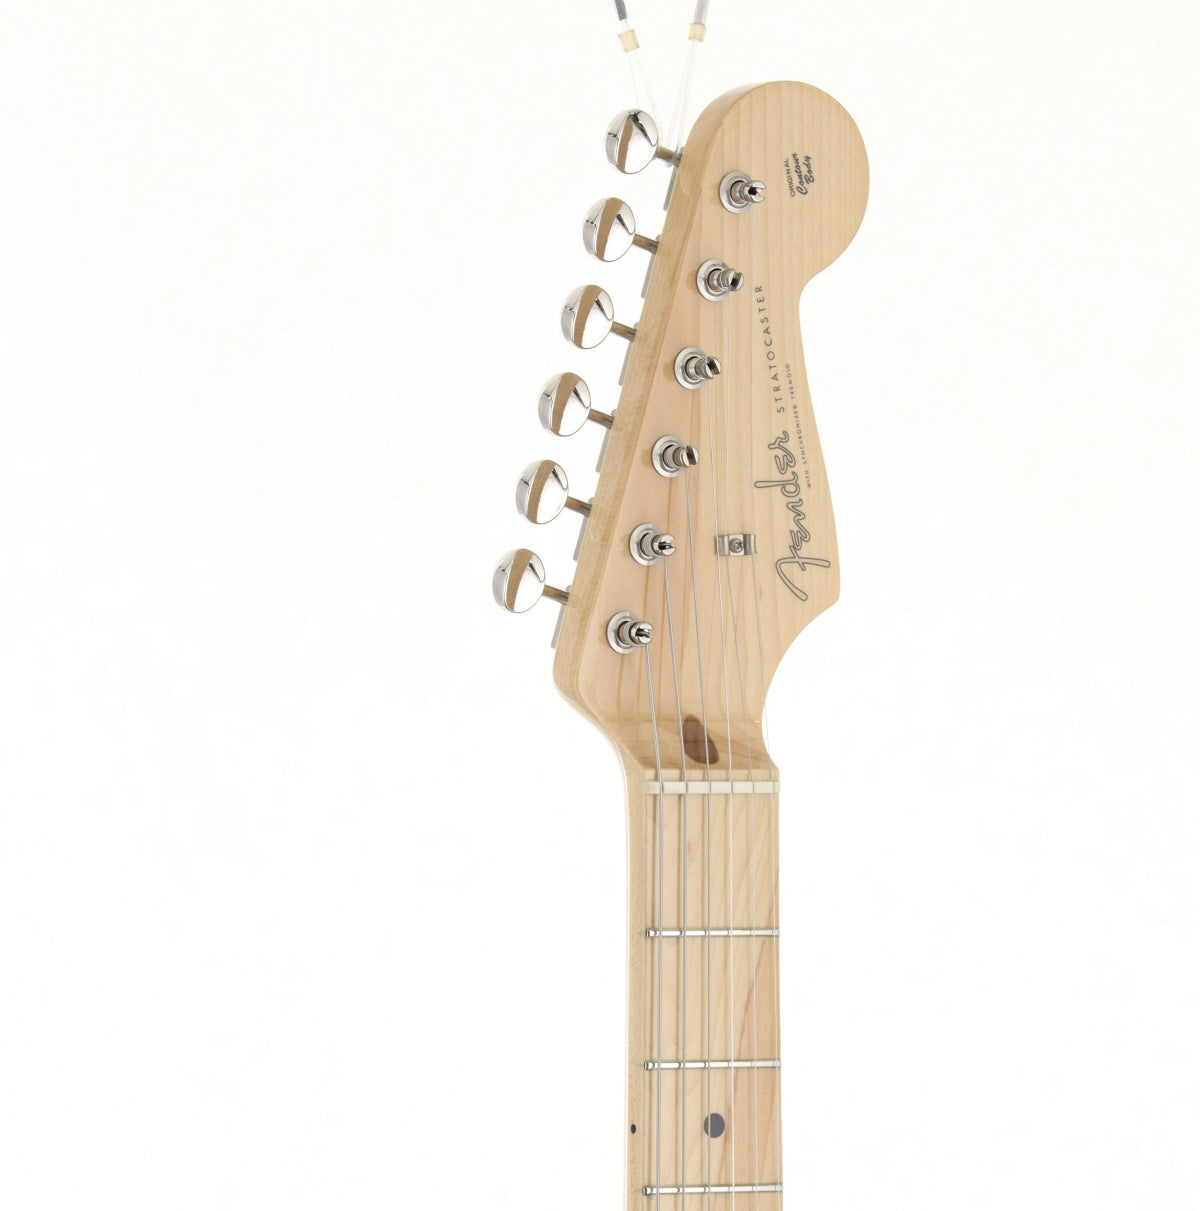 [SN JD21006119] USED Fender / M.I.J. Traditional 50s Stratocaster Black [06]